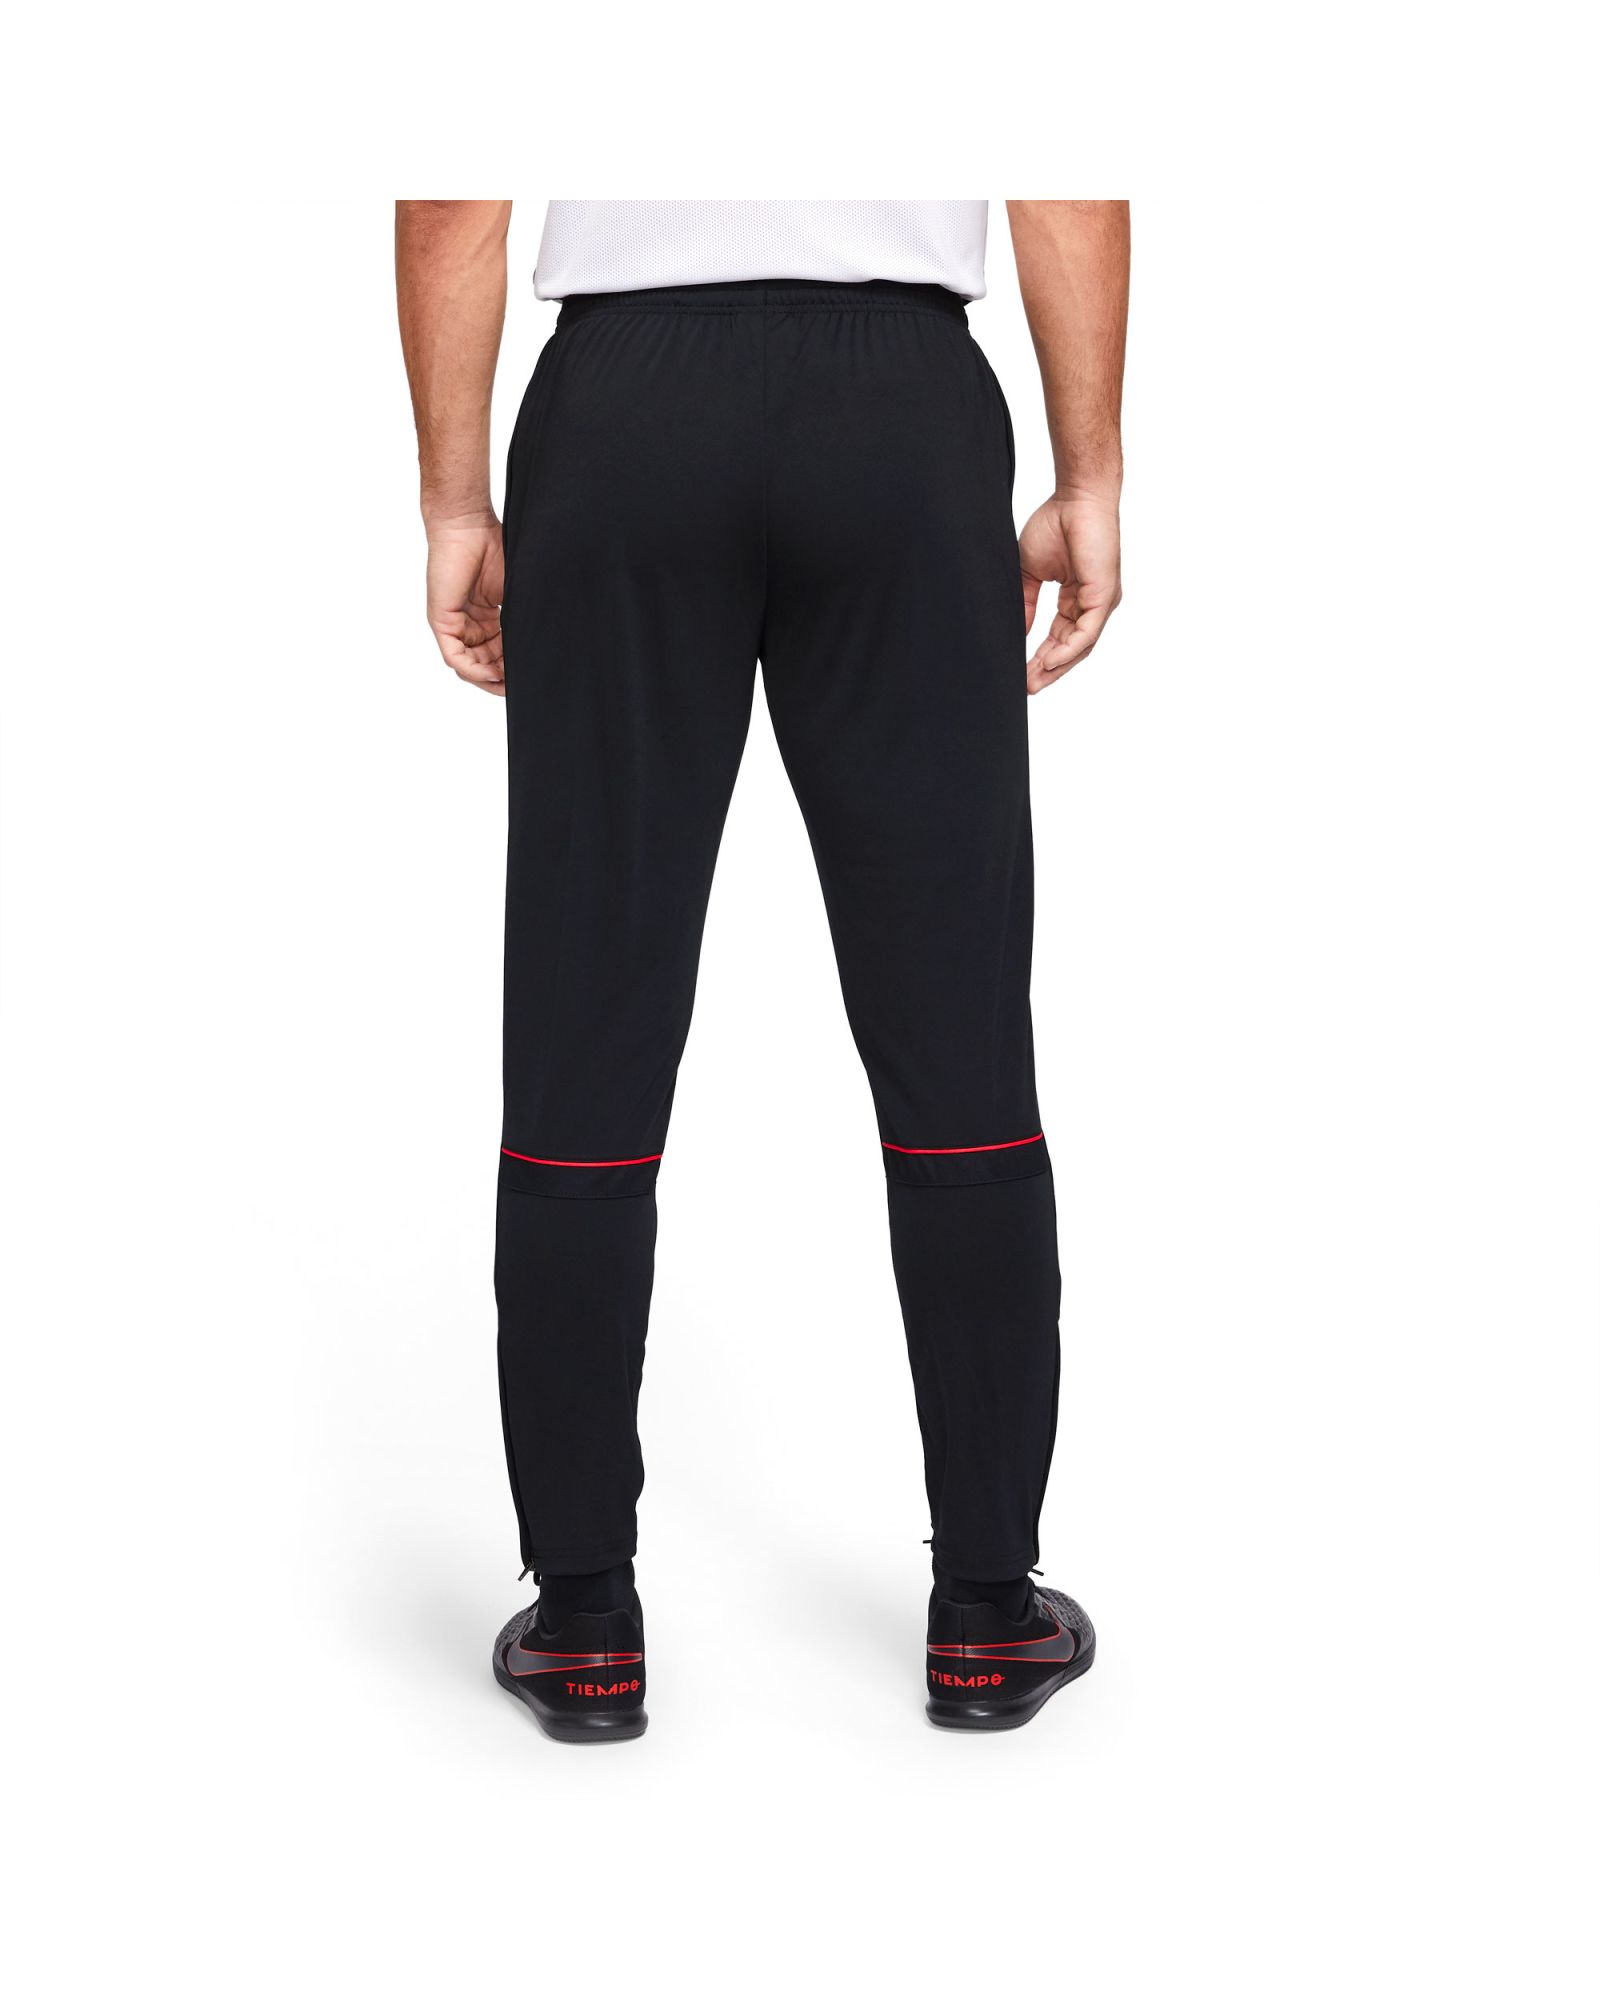 Pantalón Nike Dri-Fit Academy 21 negro